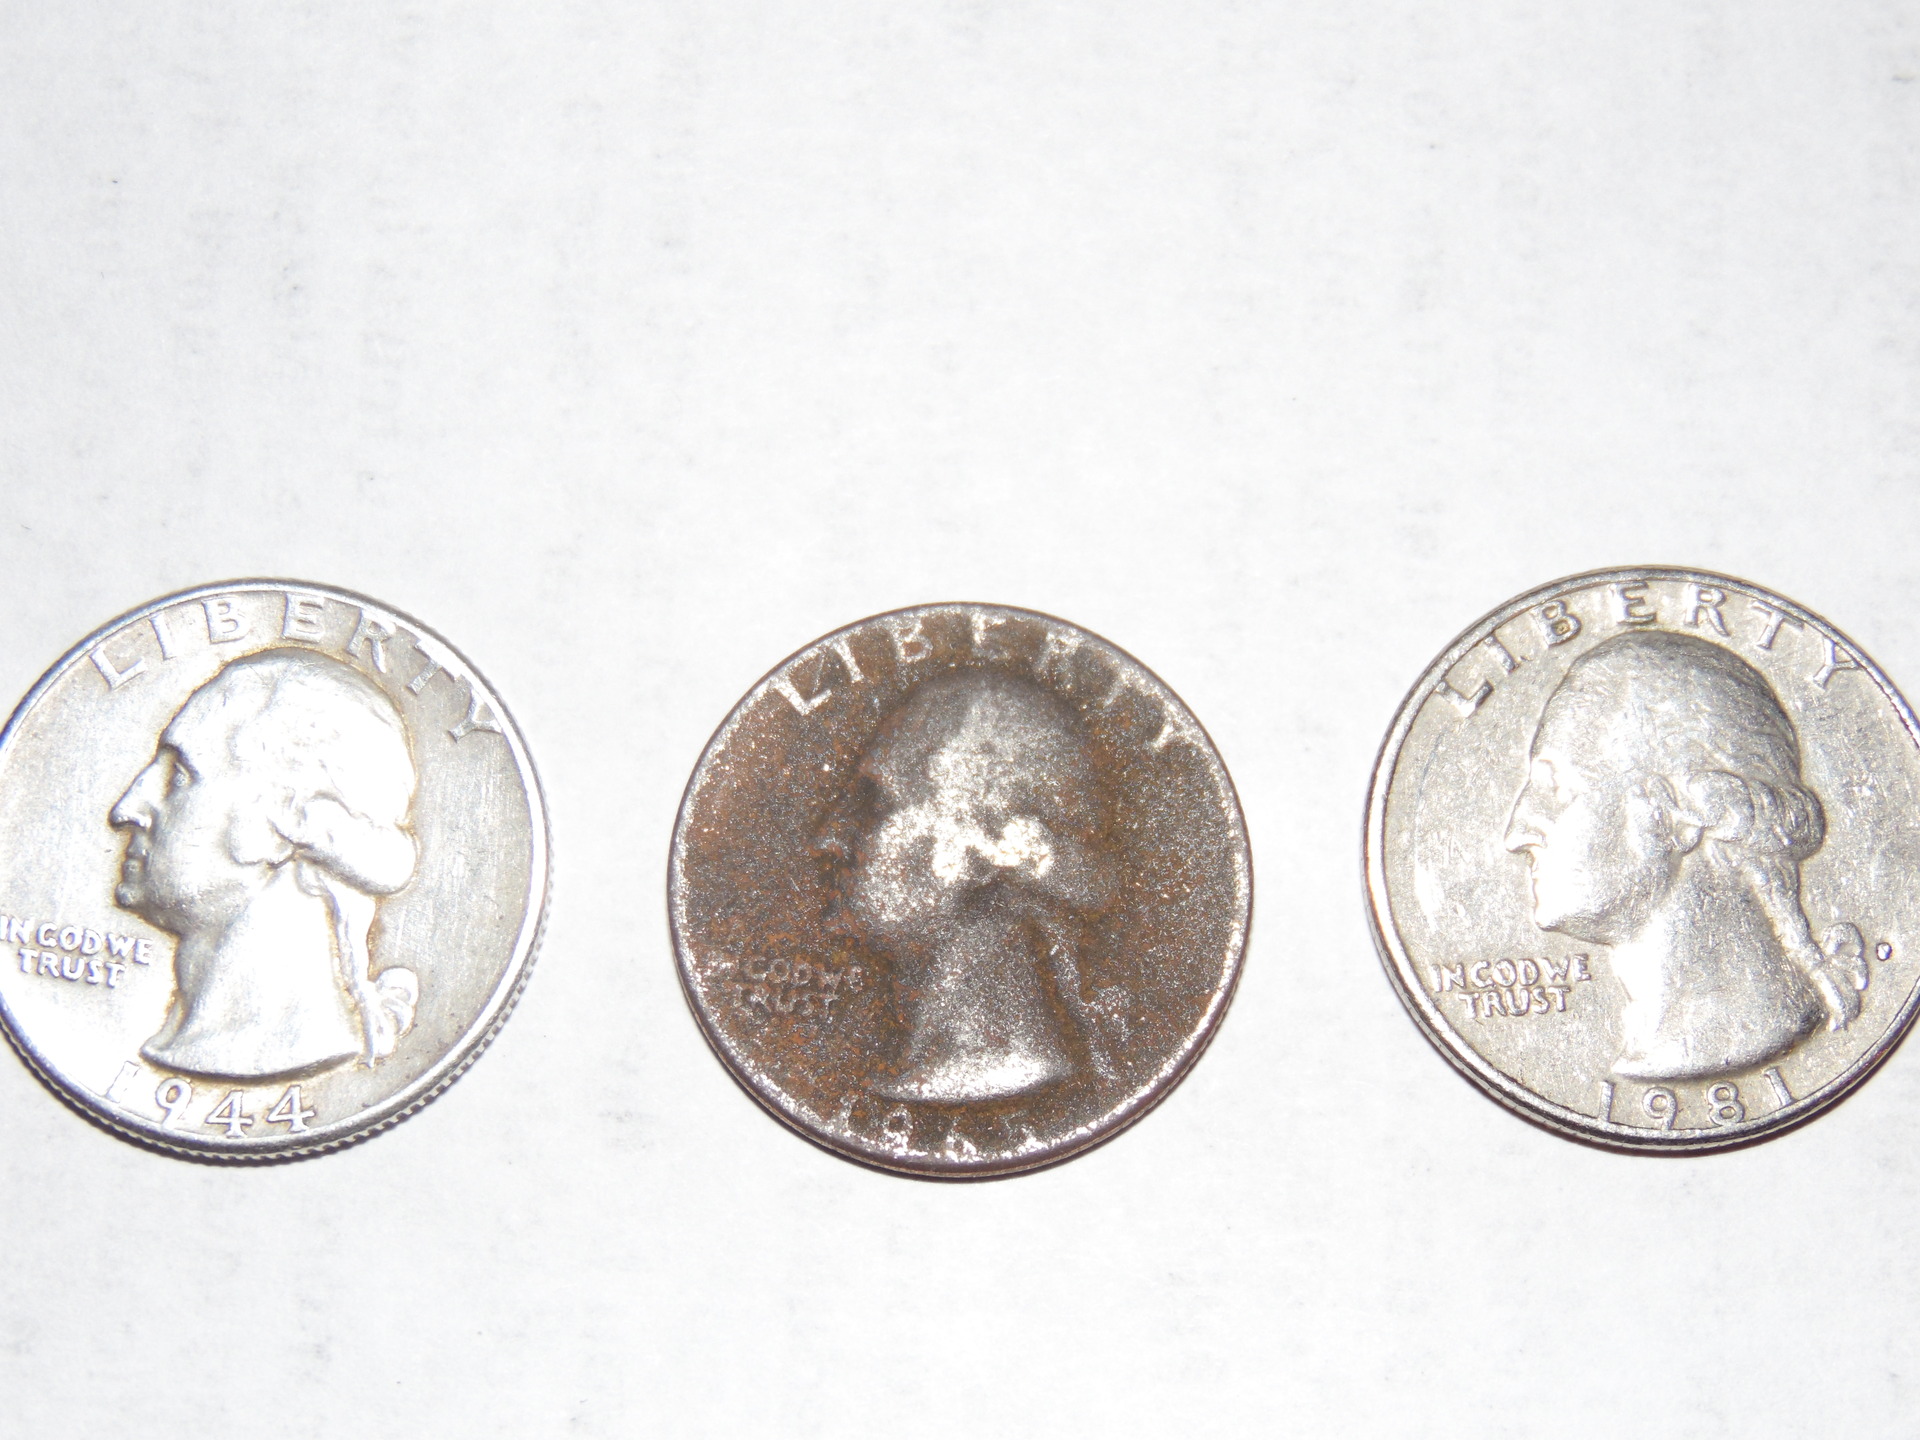 1965 silver/steel quarter??? help!!! Coin Talk